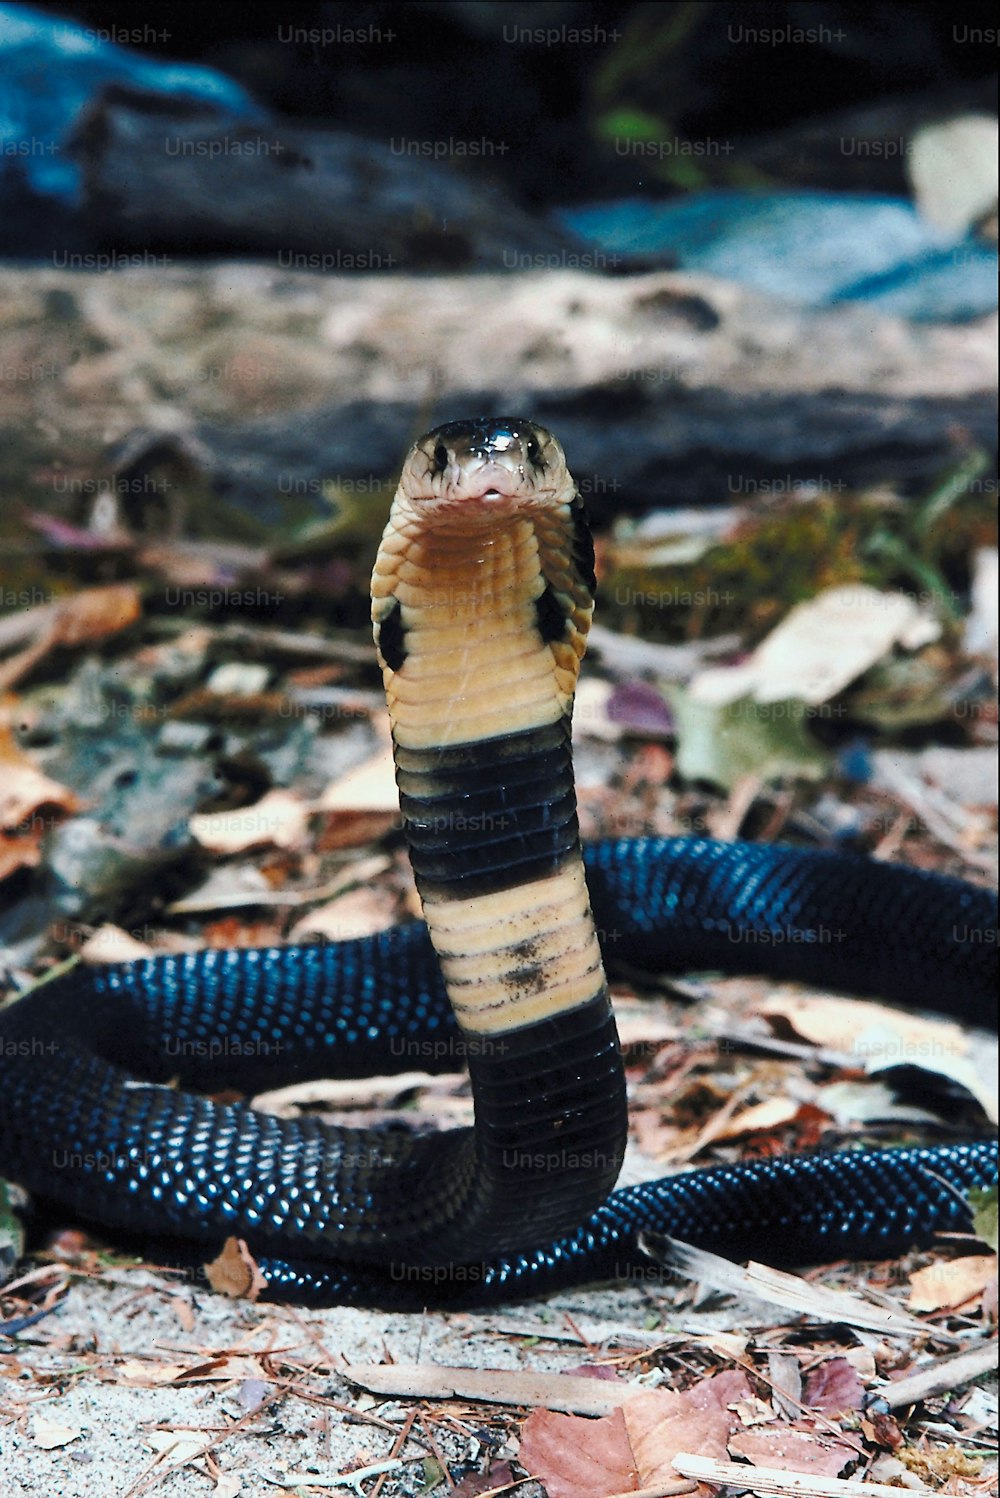 viper snake logo hd